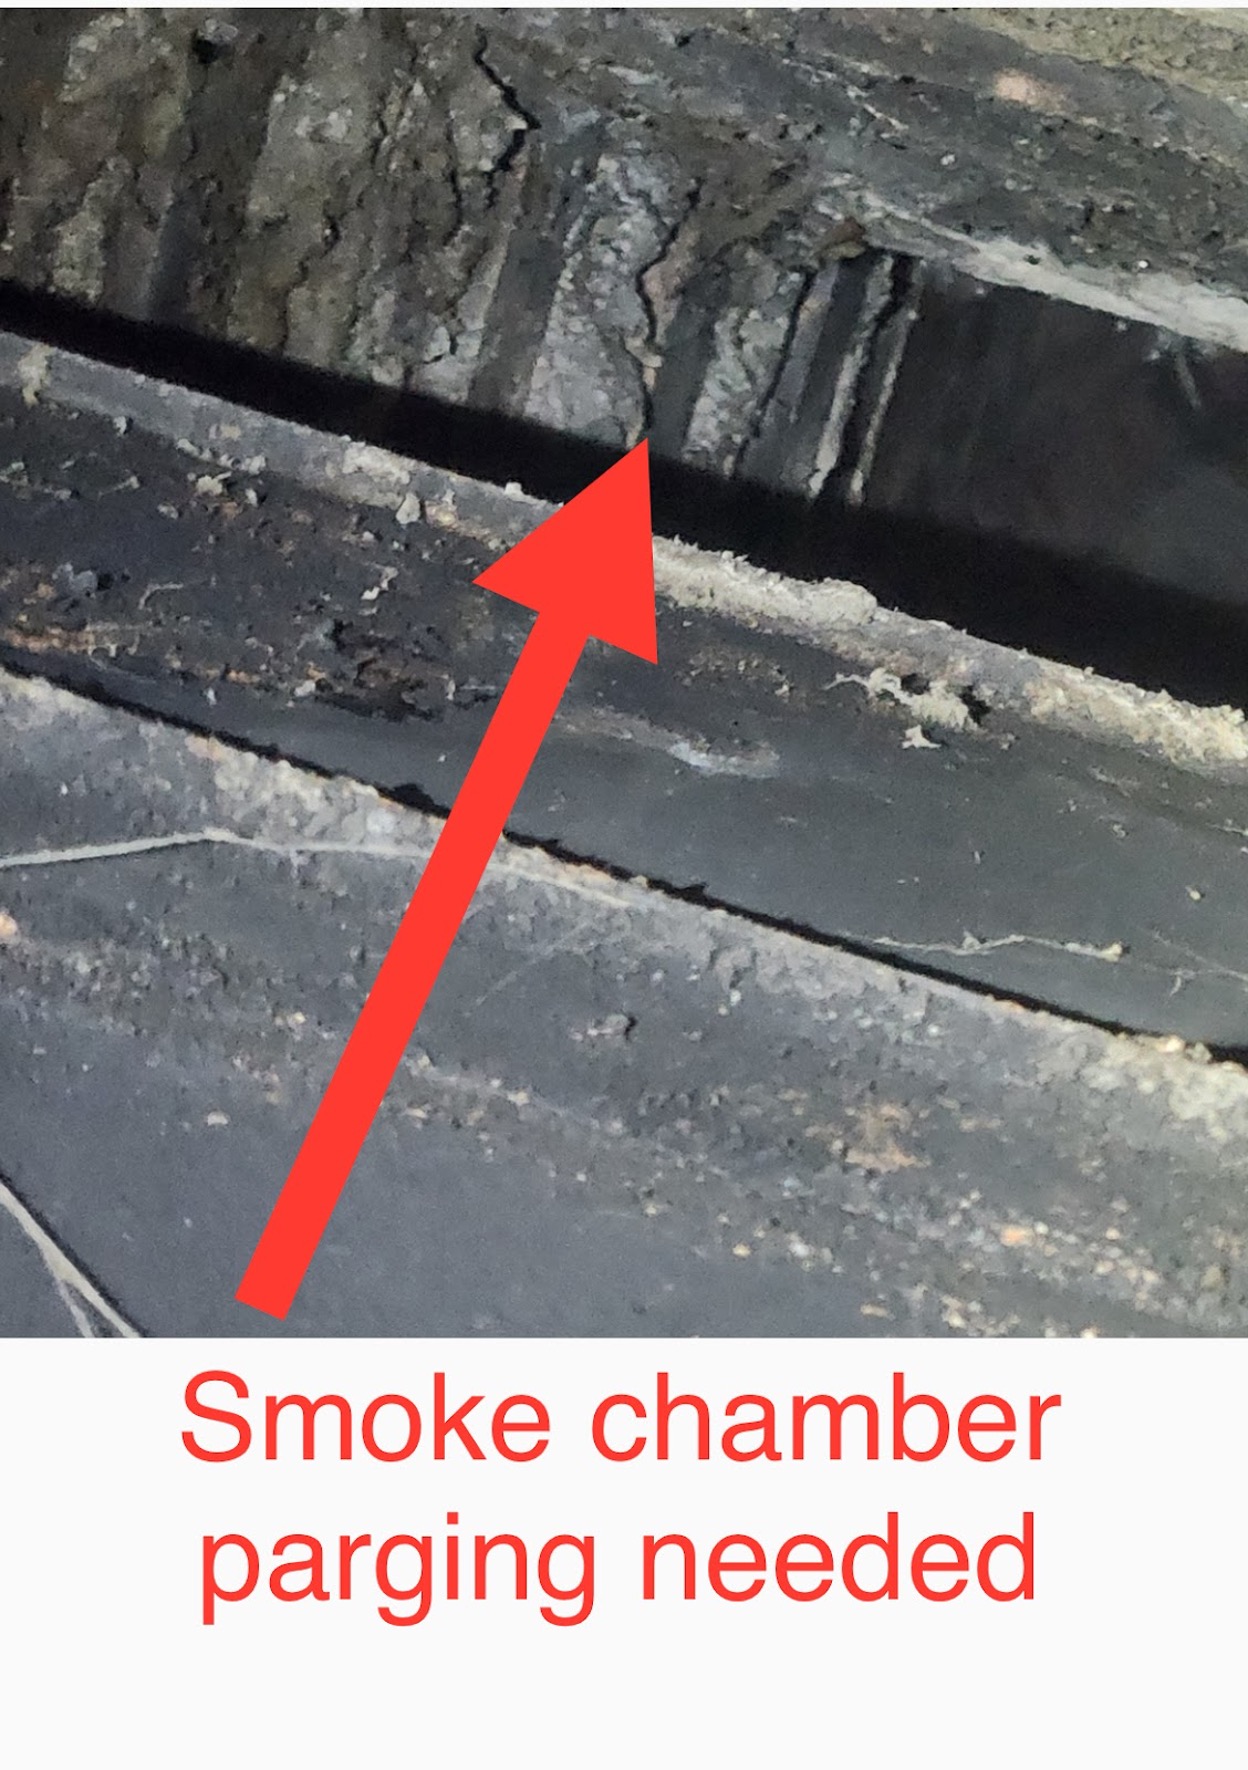 chimney chamber-in-need-of-repair